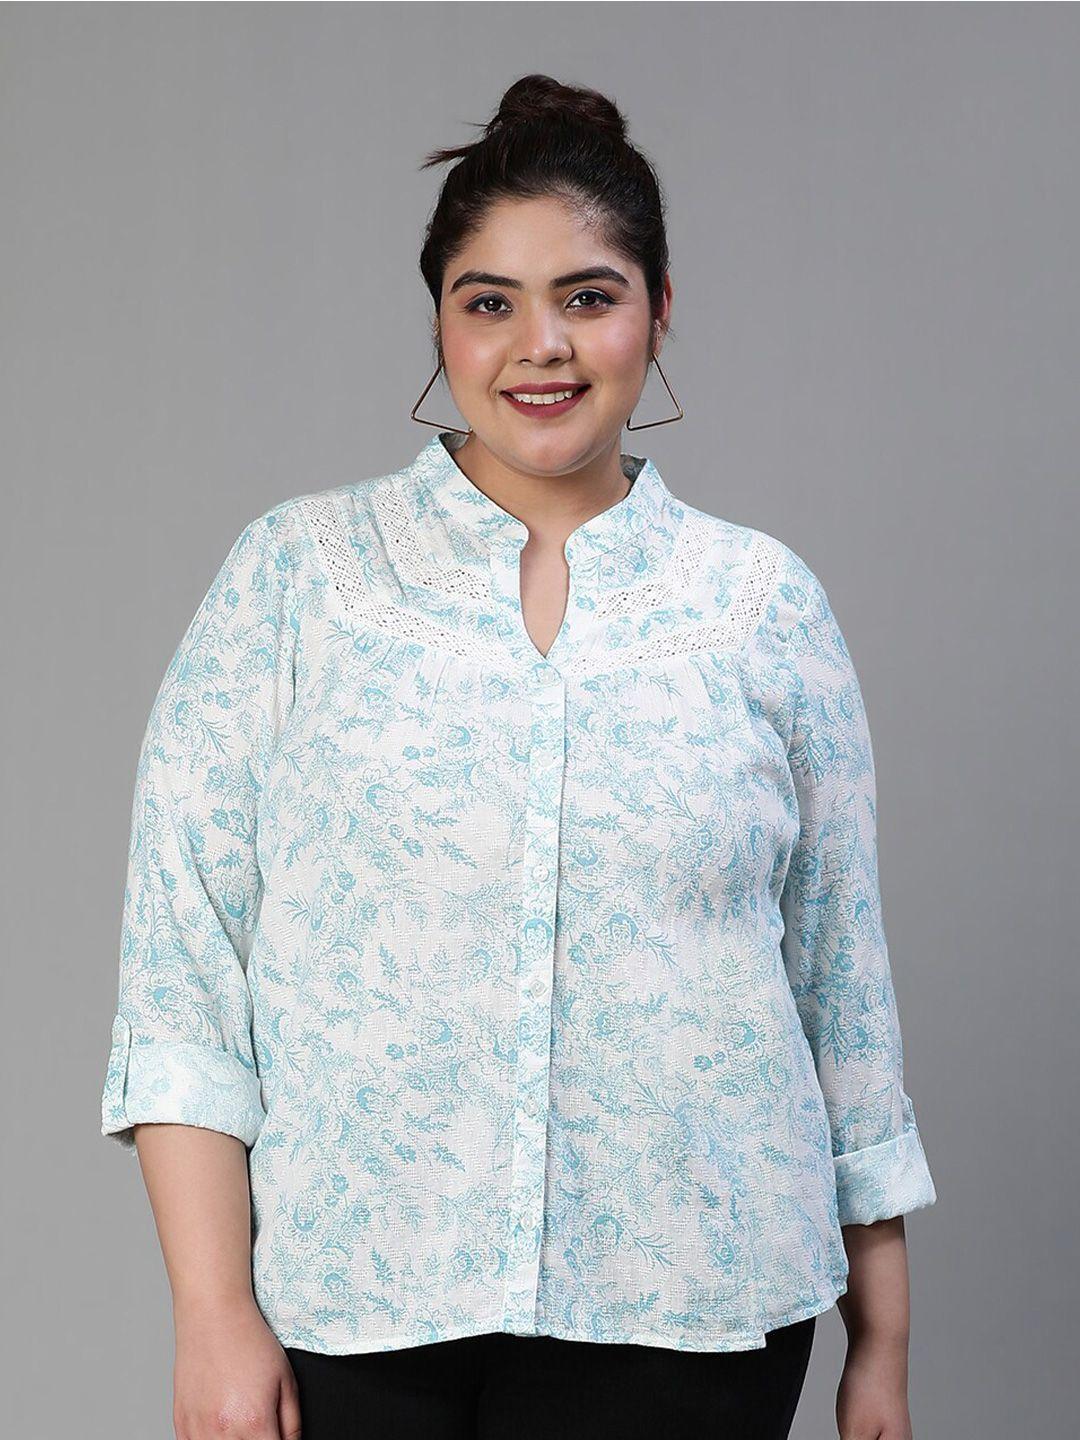 oxolloxo standard floral printed mandrain collar cotton casual shirt